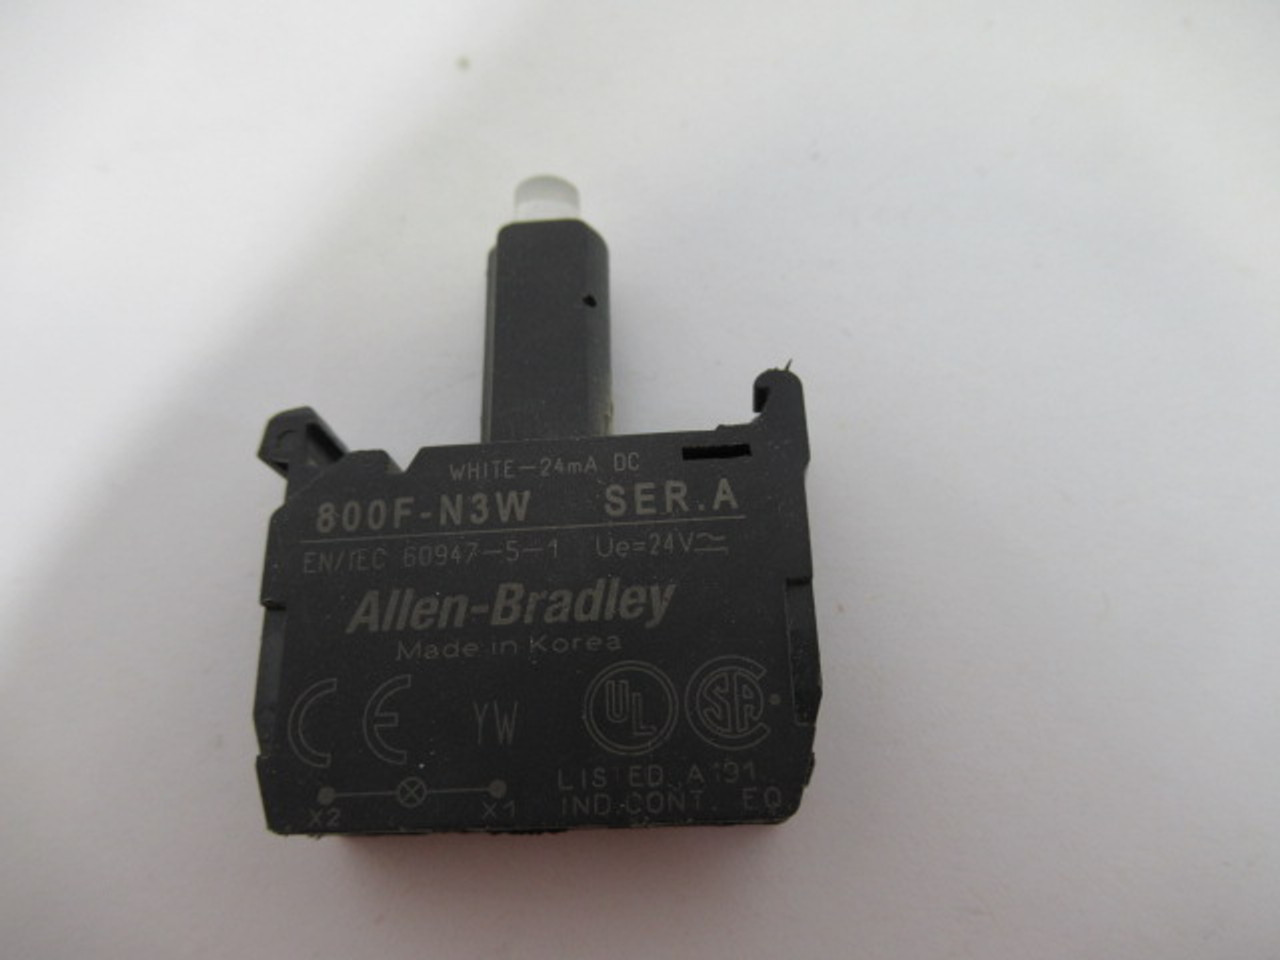 Allen-Bradley 800F-N3W Series A White Push Button Lamp Module 24mA 24VDC USED